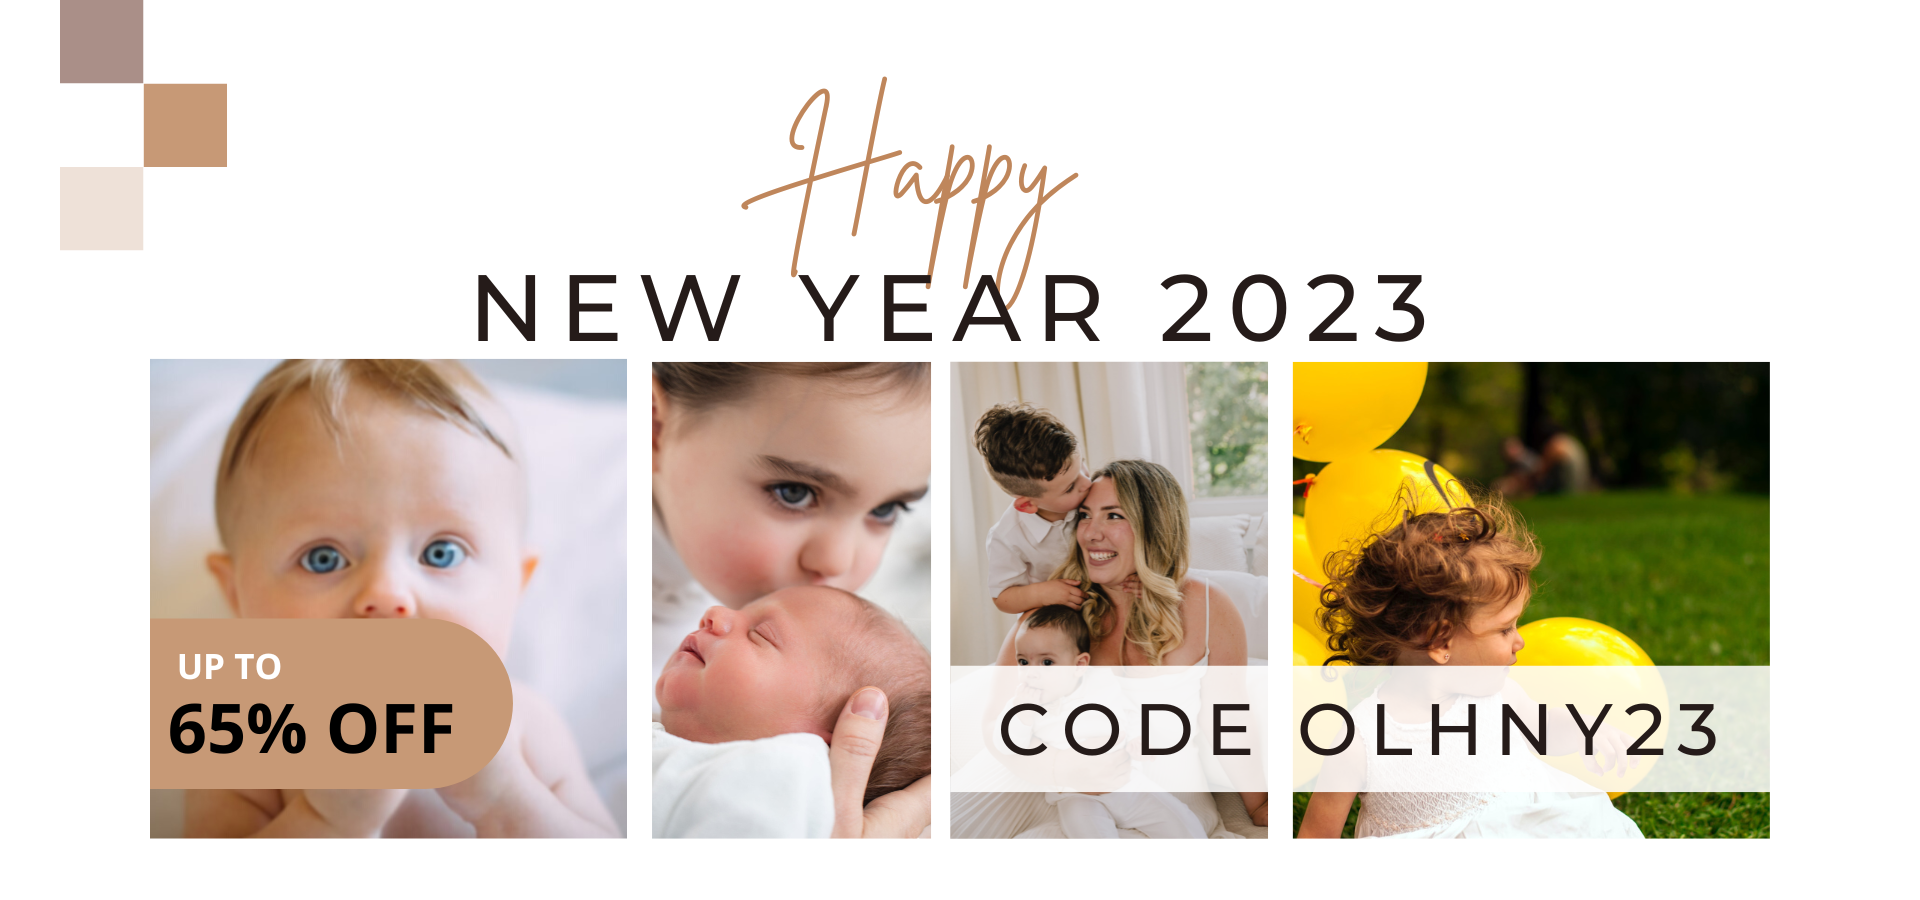 New Year 2023 Sale at OleOle Baby Shop Australia - Enjoy up to 65% OFF